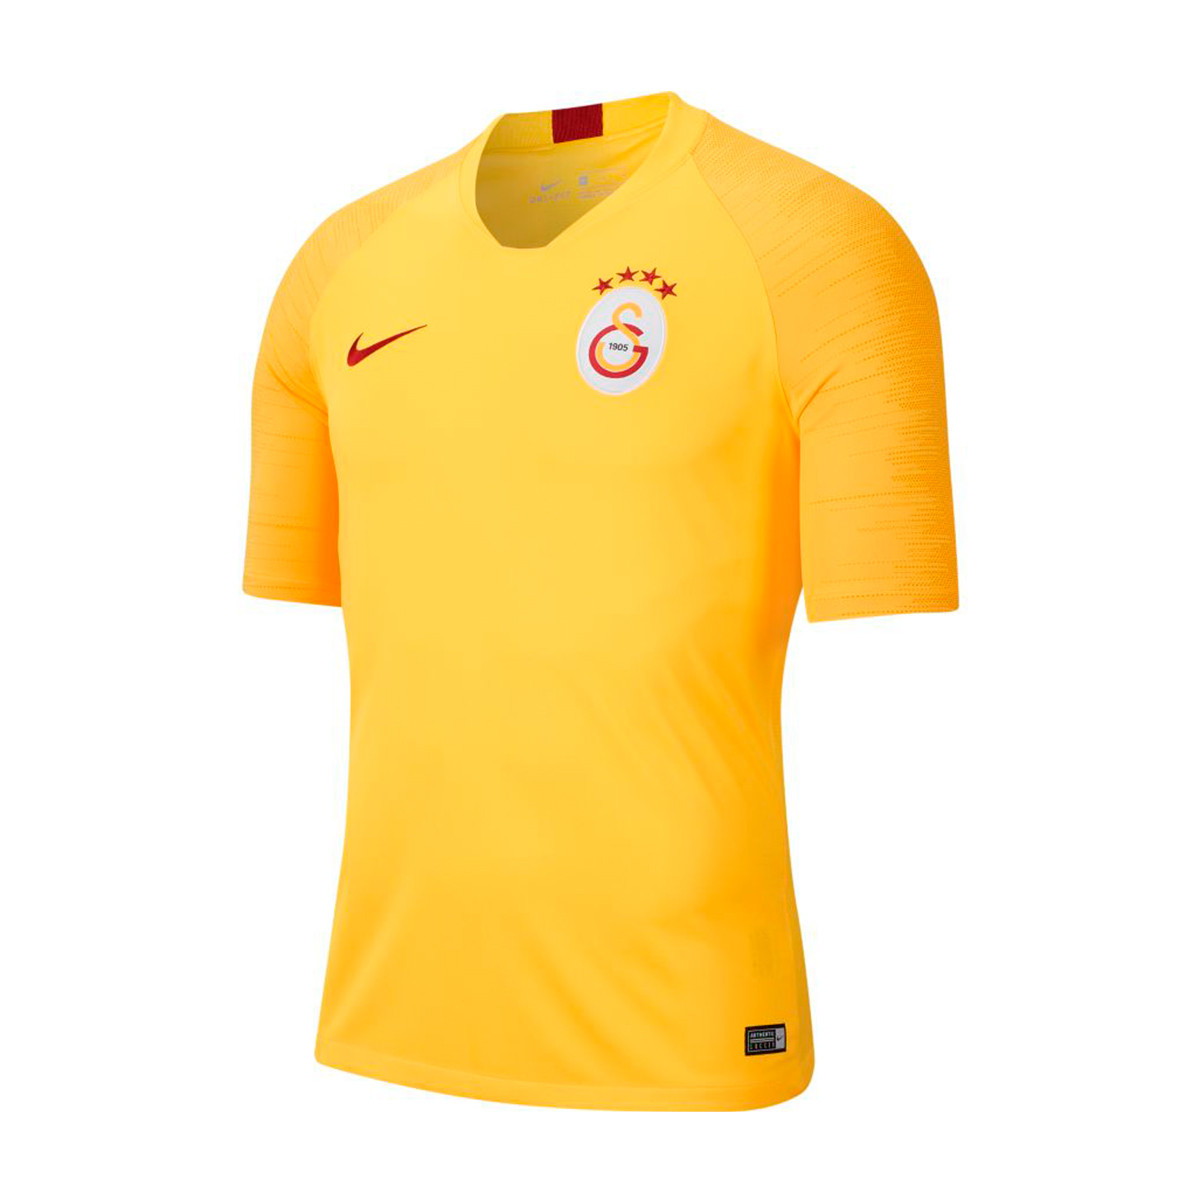 Jersey Nike Galatasaray Sk Breathe Strike 2019 2020 Laser Orange Vivid Orange Pepper Red Football Store Futbol Emotion nike galatasaray sk breathe strike 2019 2020 jersey